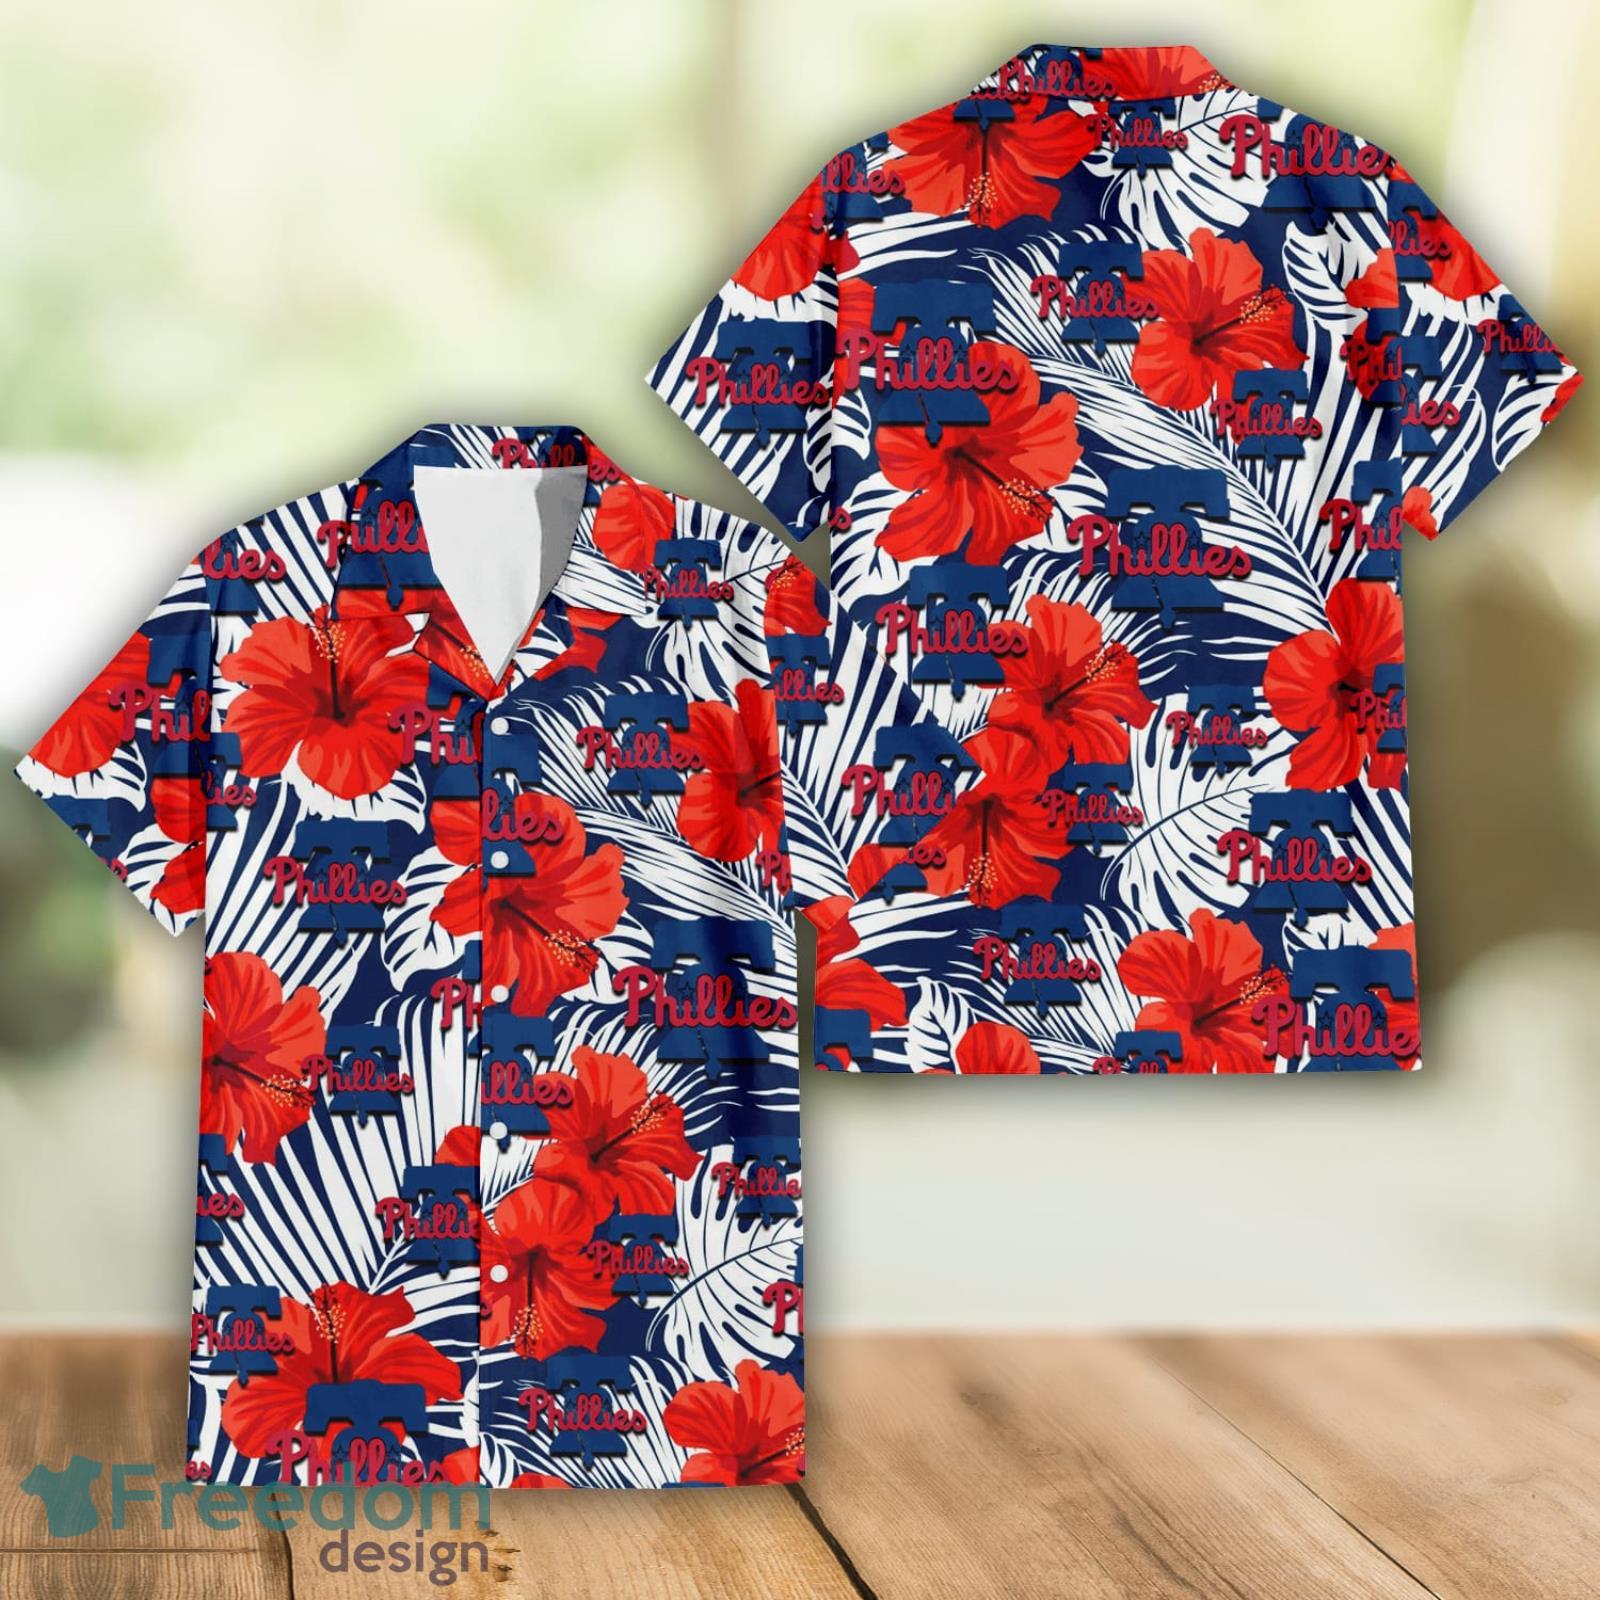 Boston Red Sox MLB Flower All Over Print Unisex Hawaiian Shirt - Limotees